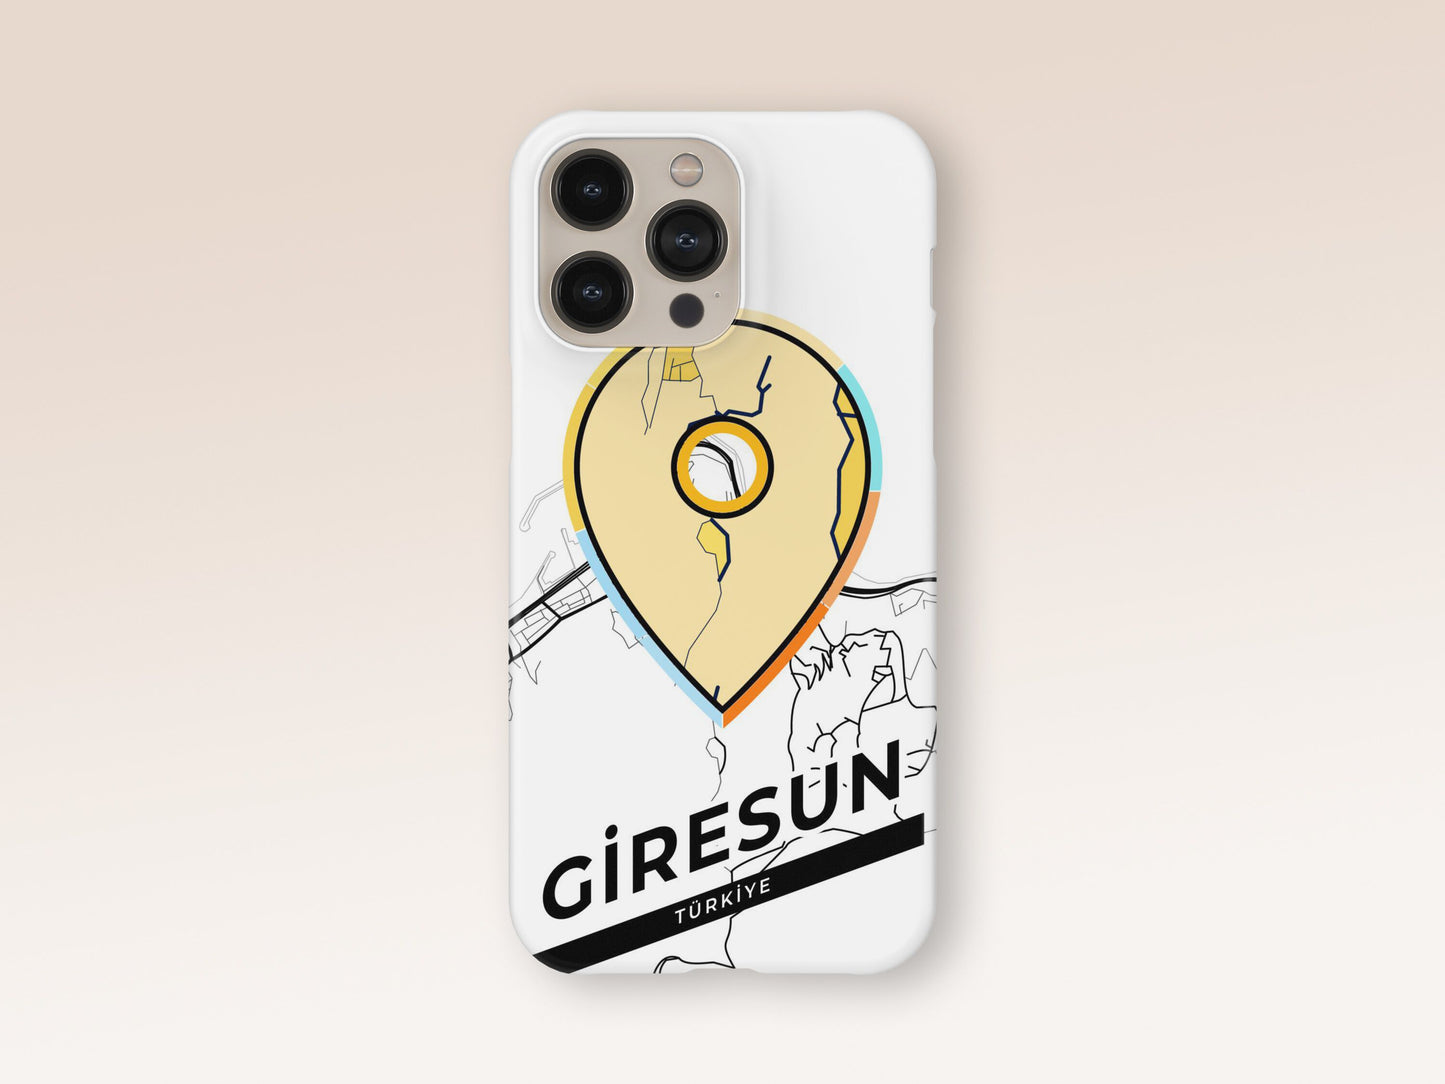 Giresun Turkey slim phone case with colorful icon. Birthday, wedding or housewarming gift. Couple match cases. 1